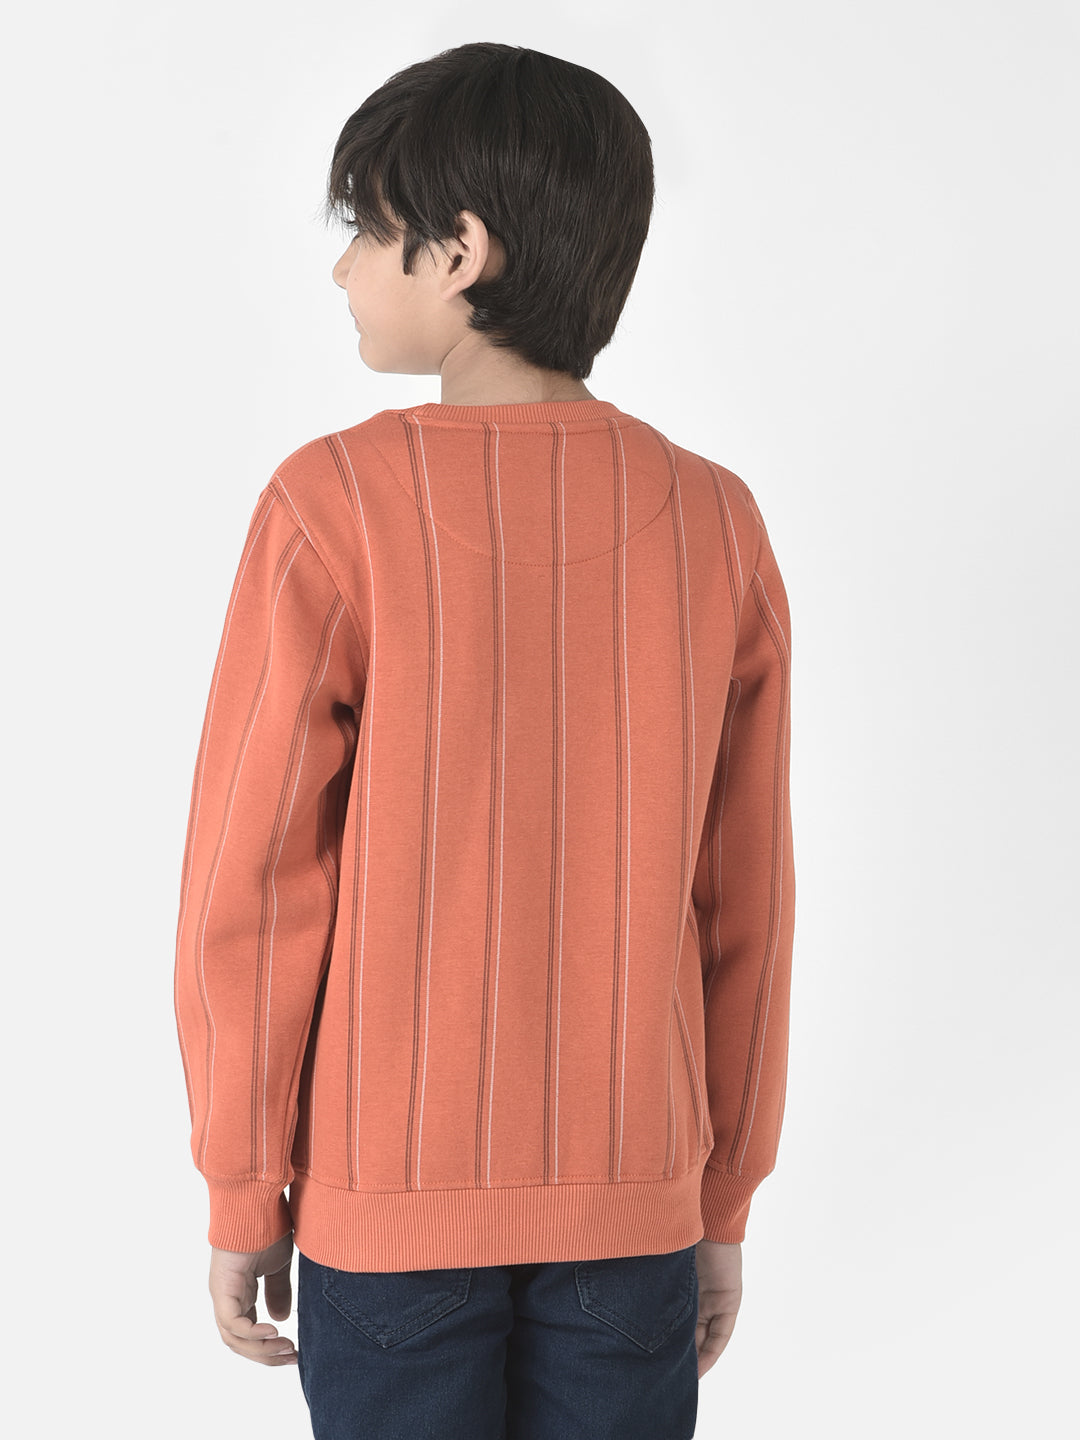  Bold Striped Rust Sweatshirt